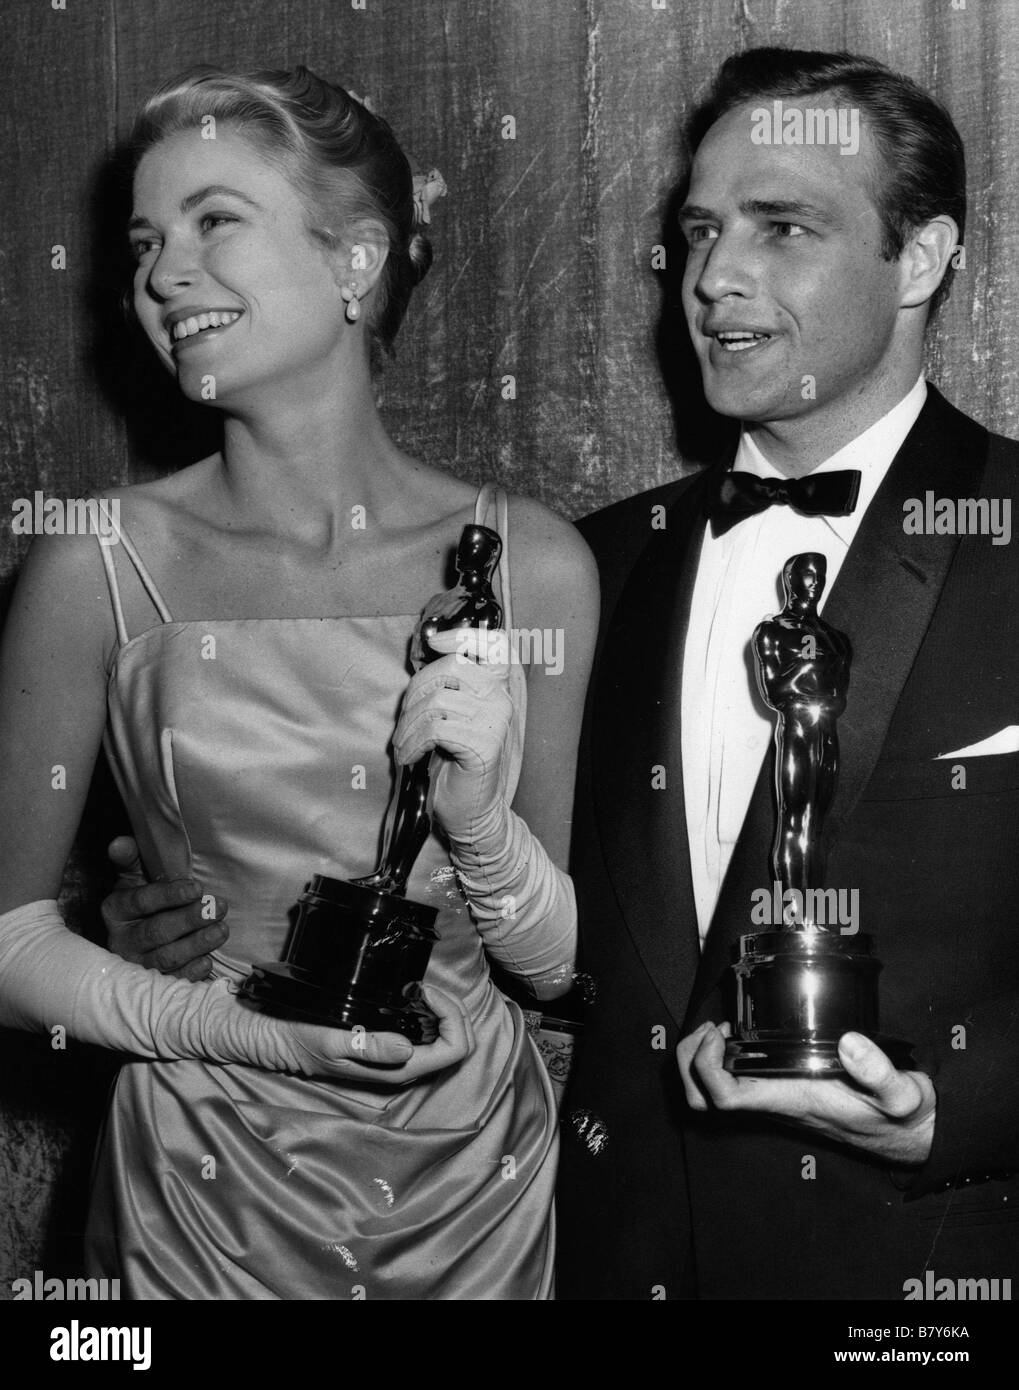 Cérémonie des Oscars de 1955 Marlon Brando receives an oscar as Best Actor in a Leading Role  Year: meilleur acteur second rôle - in 'sur les quais', 'On the Waterfront'  Year: 1954 USA Grace Kelly receives an oscar Best Stock Photo